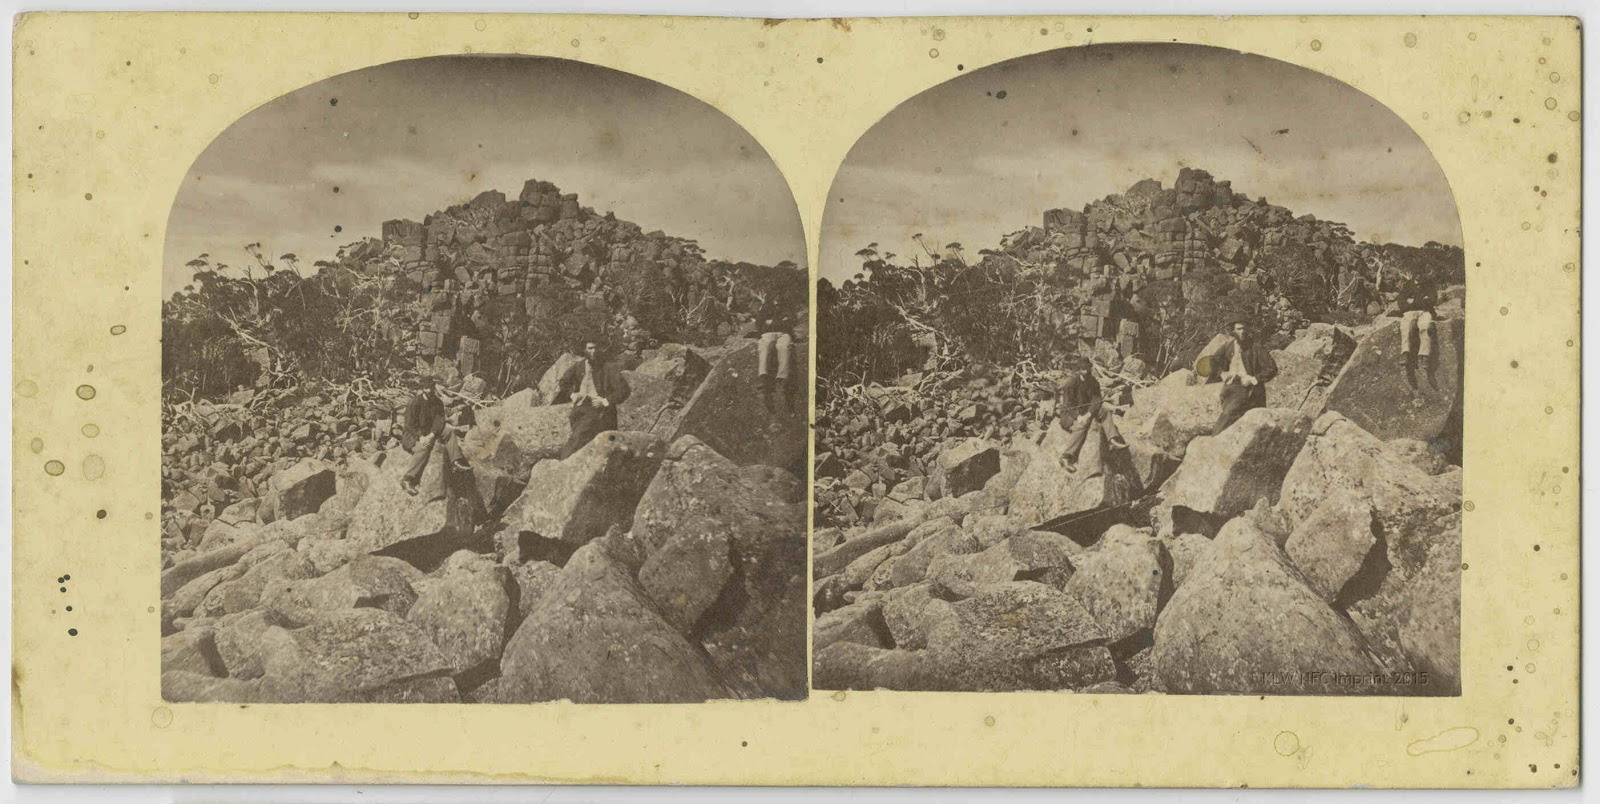 Three men sitting on boulders, kunanyi/Mt. Wellington